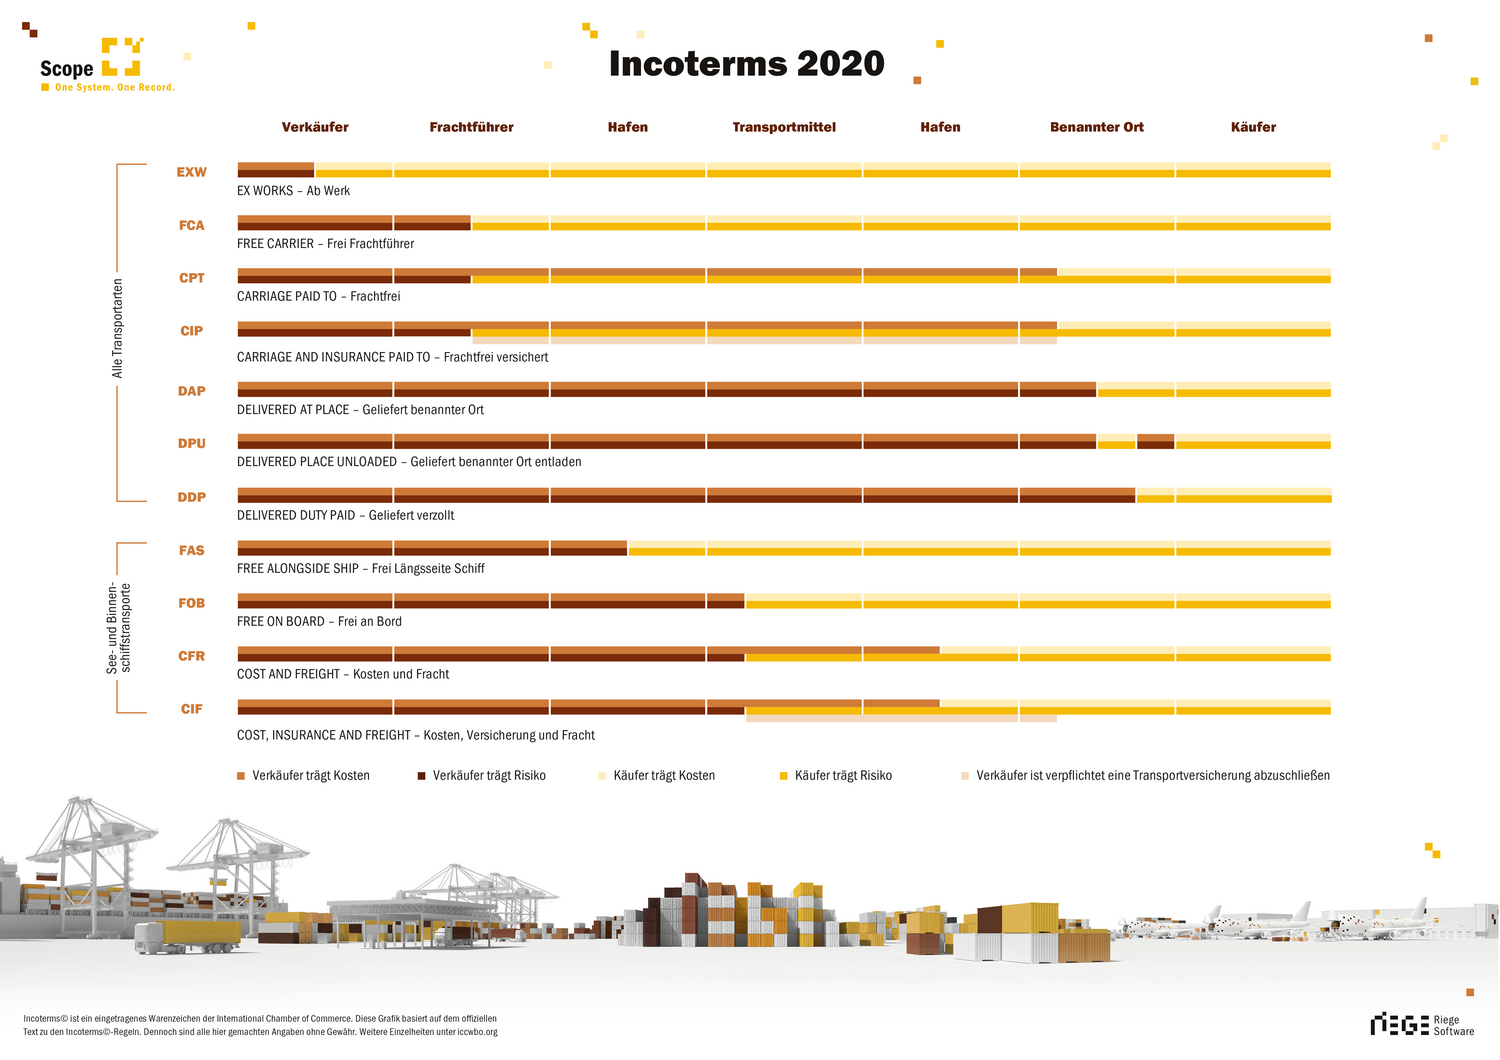 Riege Software - Incoterms 2020 - Poster DE